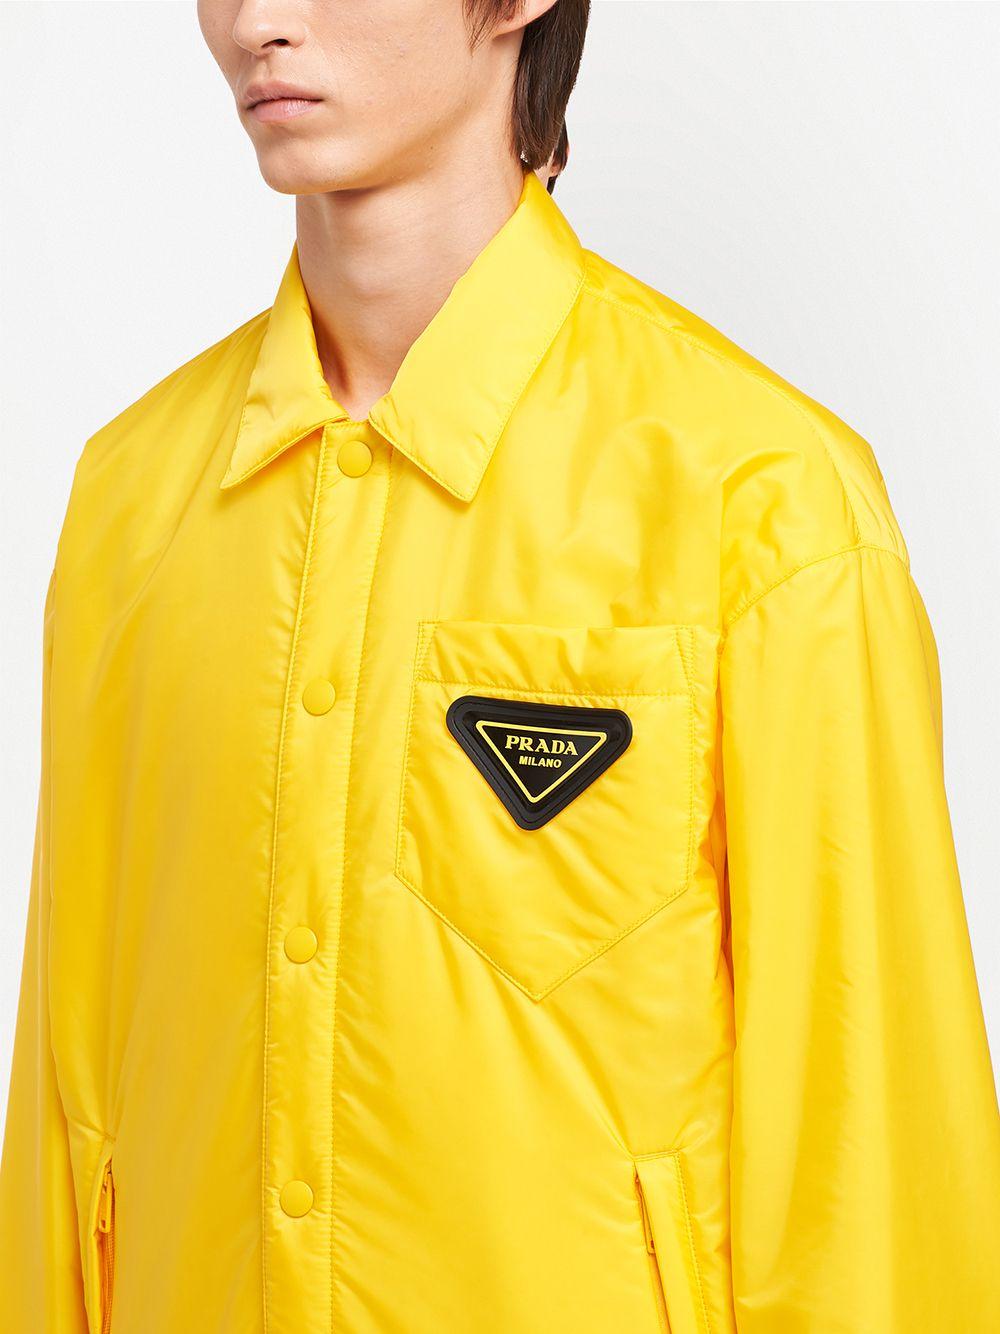 PRADA, Yellow Men's Jacket